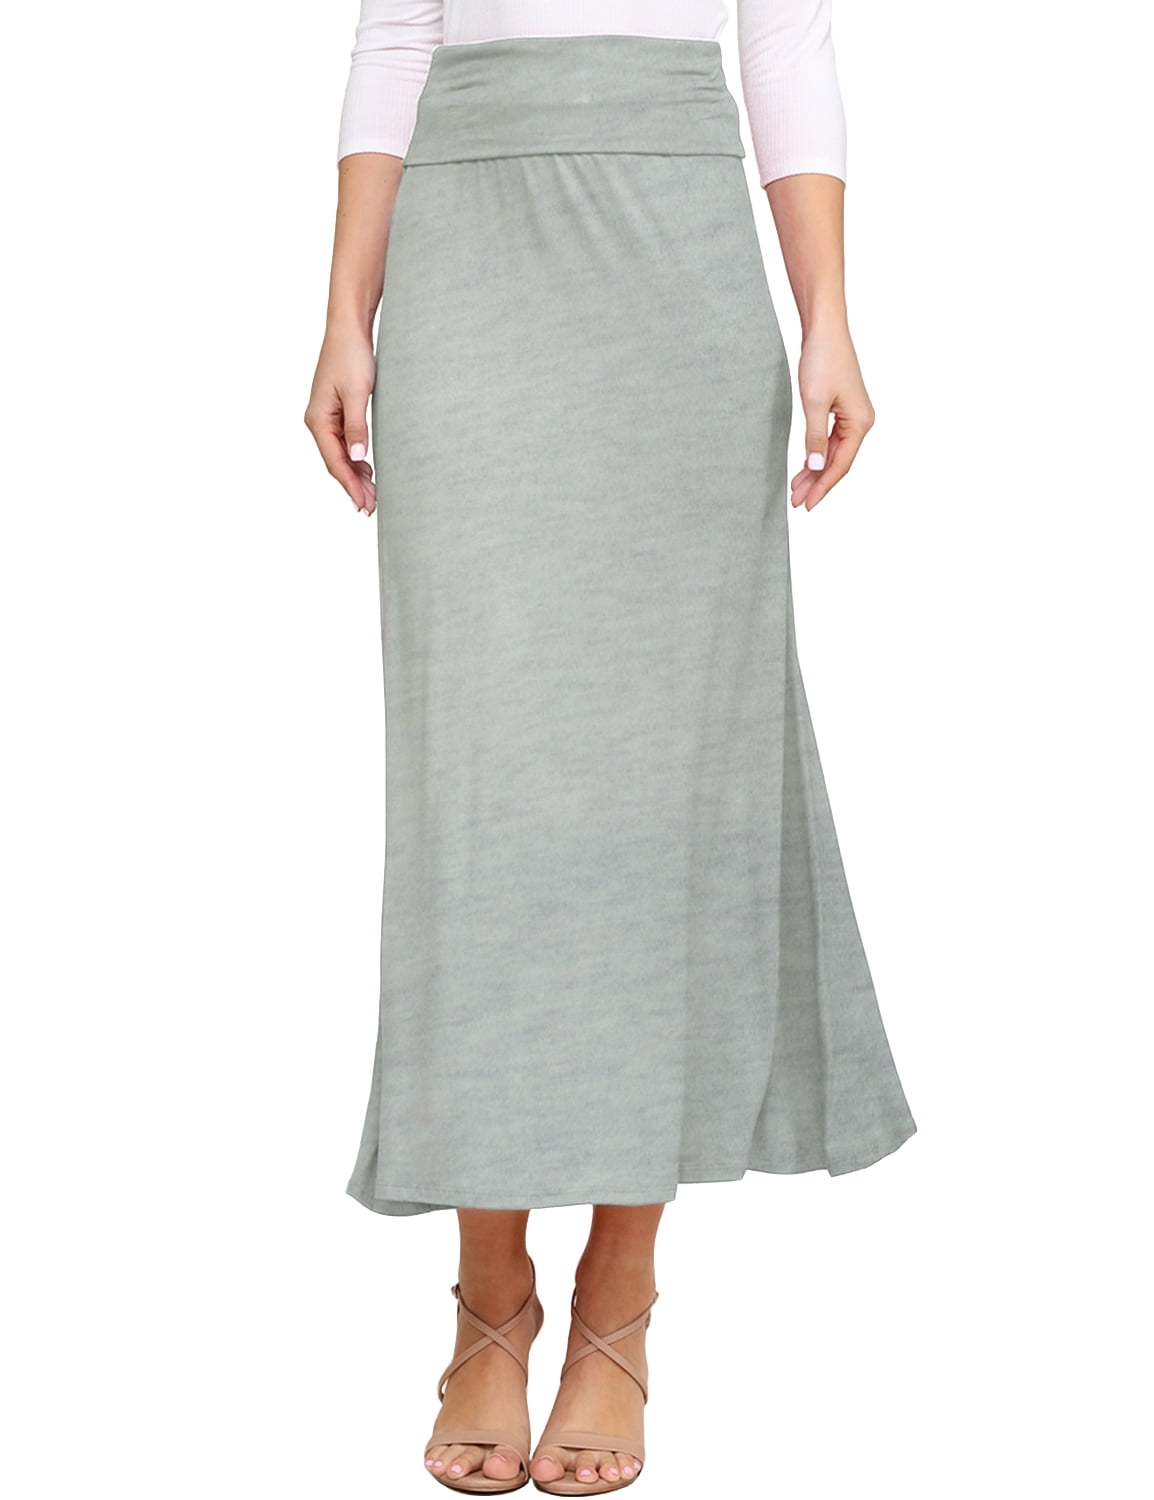 Doublju Women's High Waist Flared Maxi Skirt or Tube Top Dress with ...